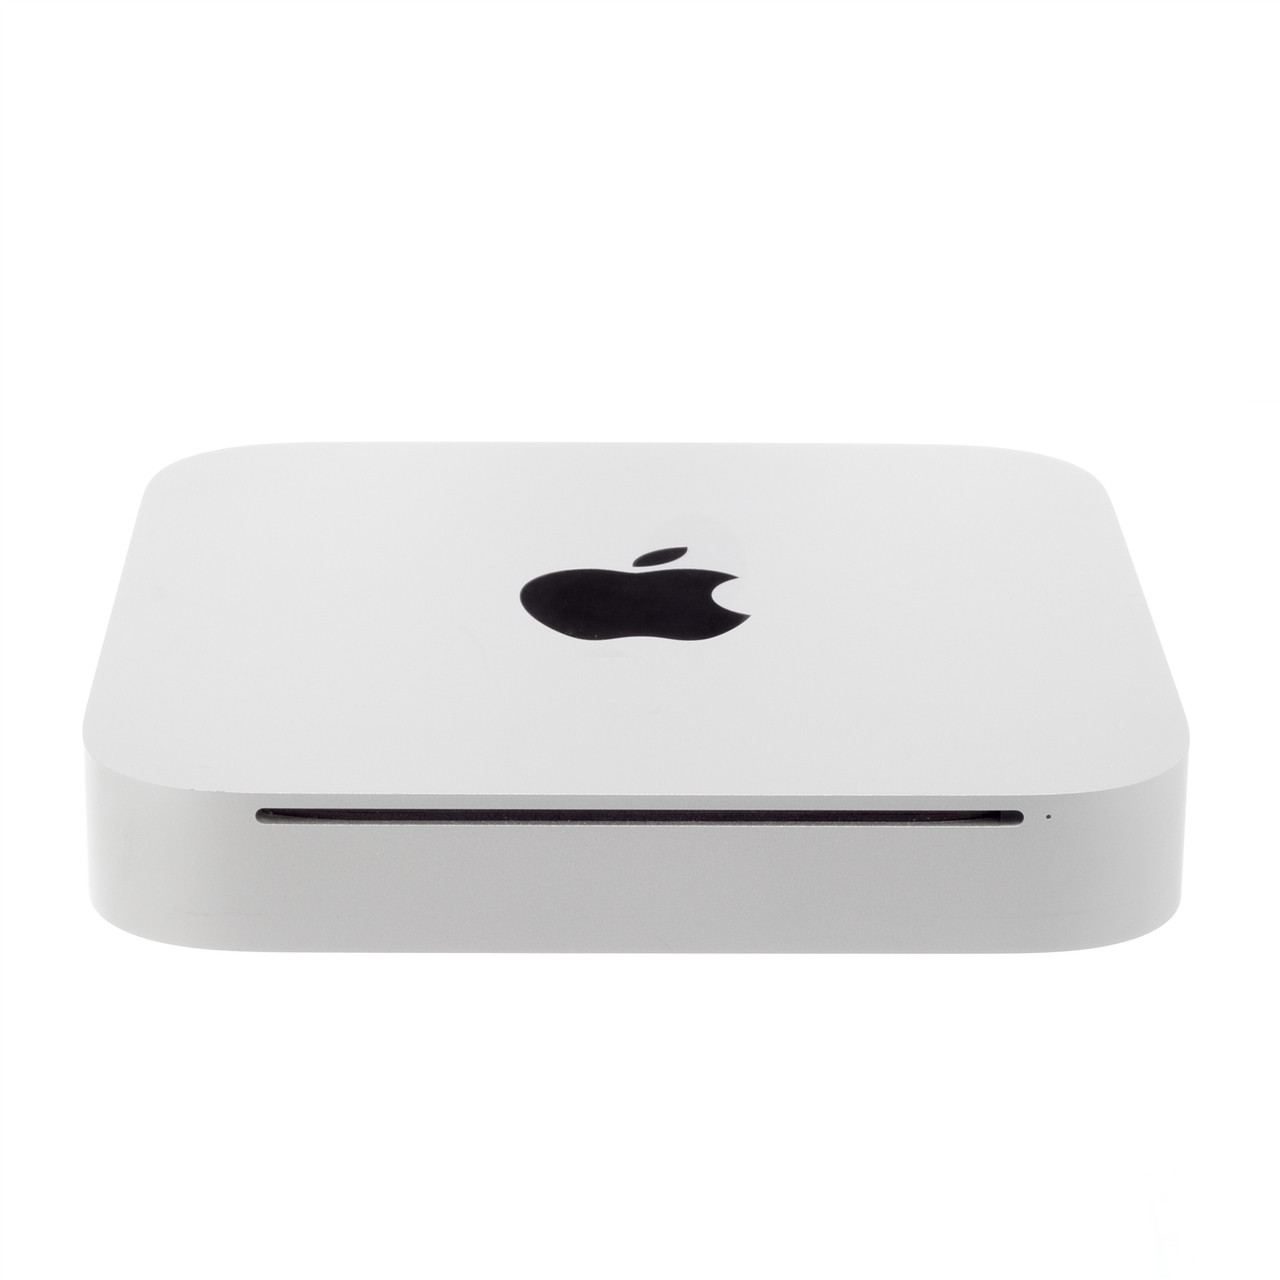 Apple Mac mini 2.4GHz Core 2 Duo (Mid 2010) MC270LL/A - Very Good Condition